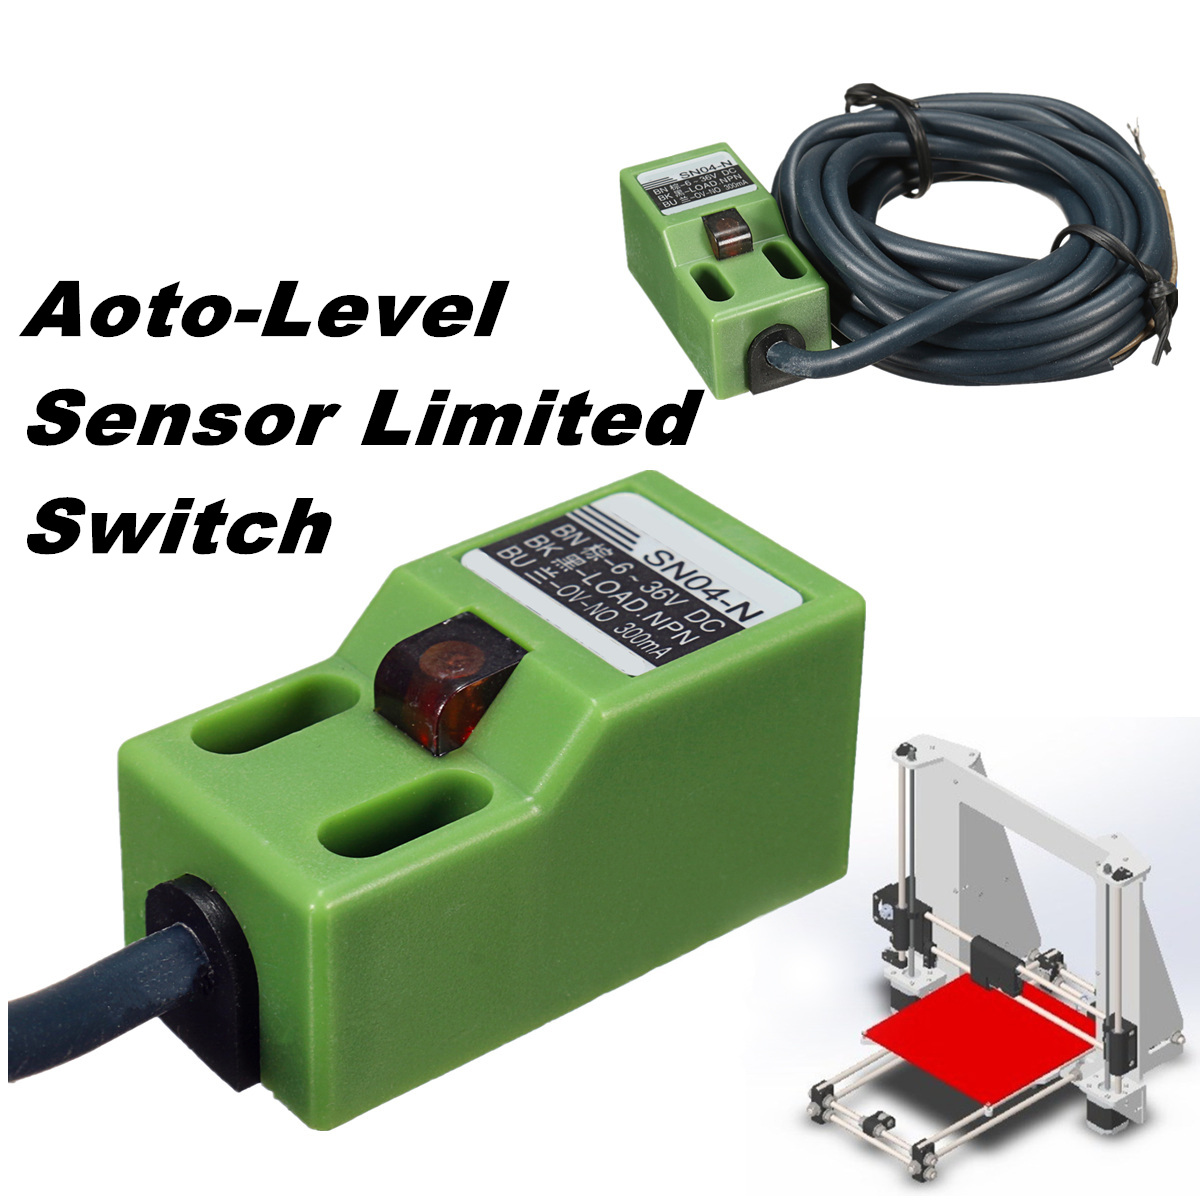 6-36V Auto-Level Sensor Limited Waterproof Switch For Prusa I3 3D Printer 1